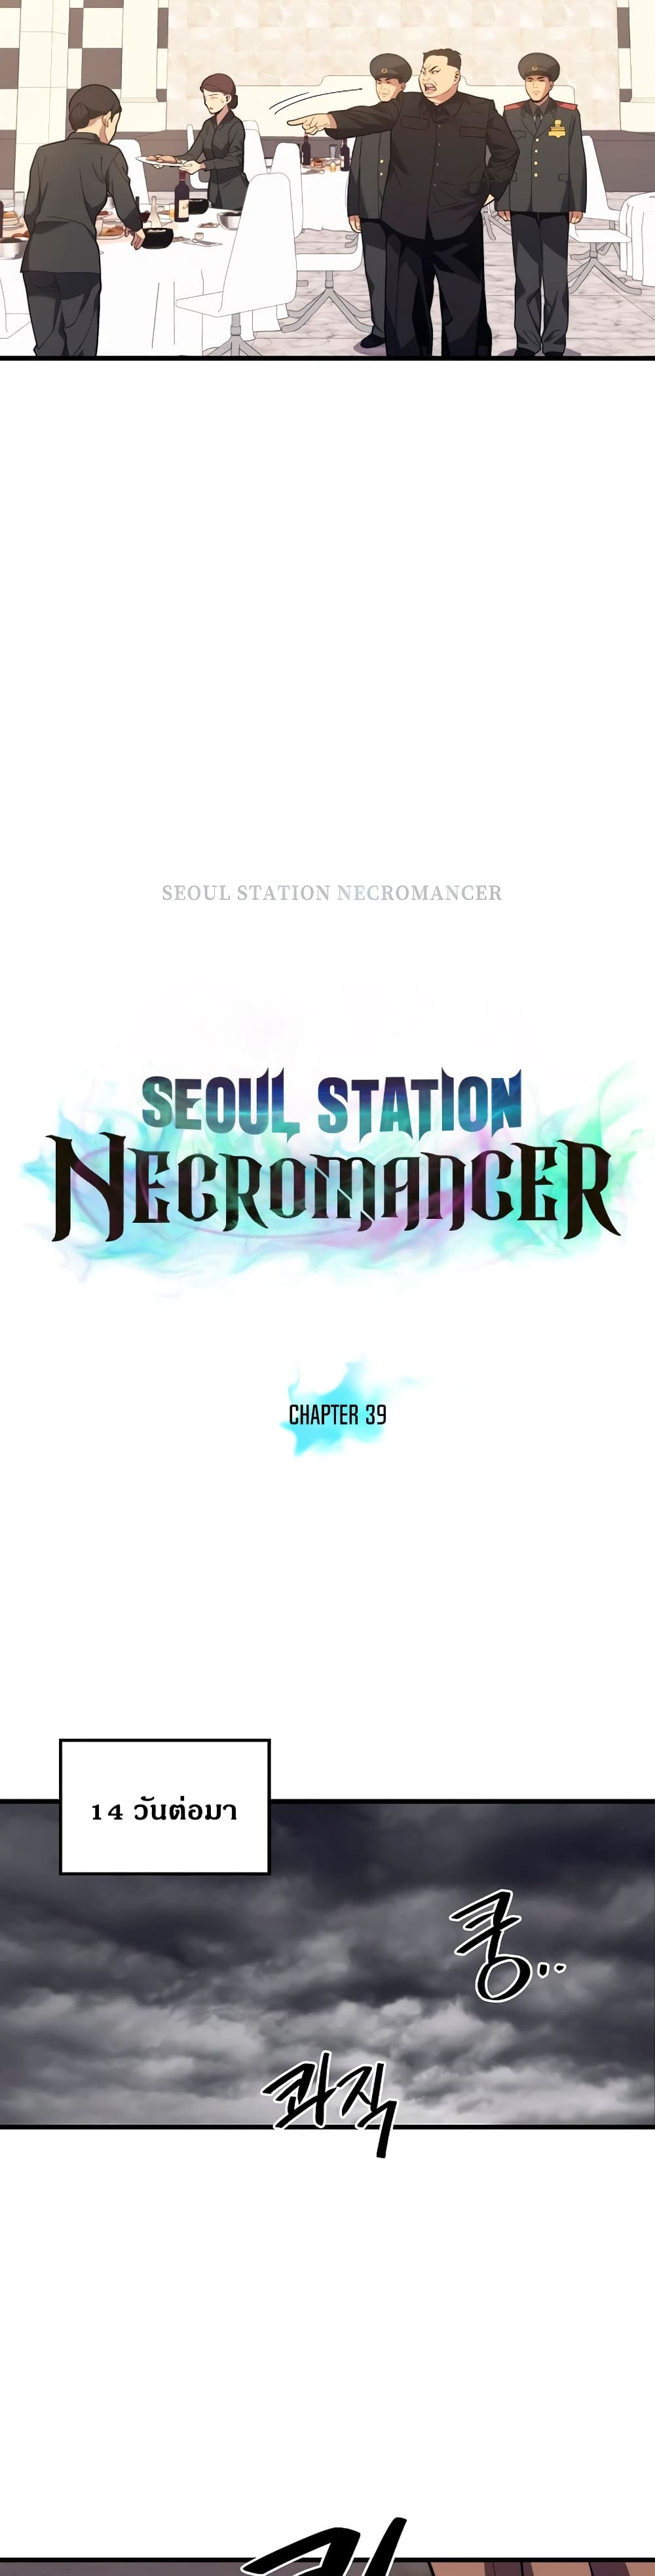 Seoul Station Necromancer 39-39